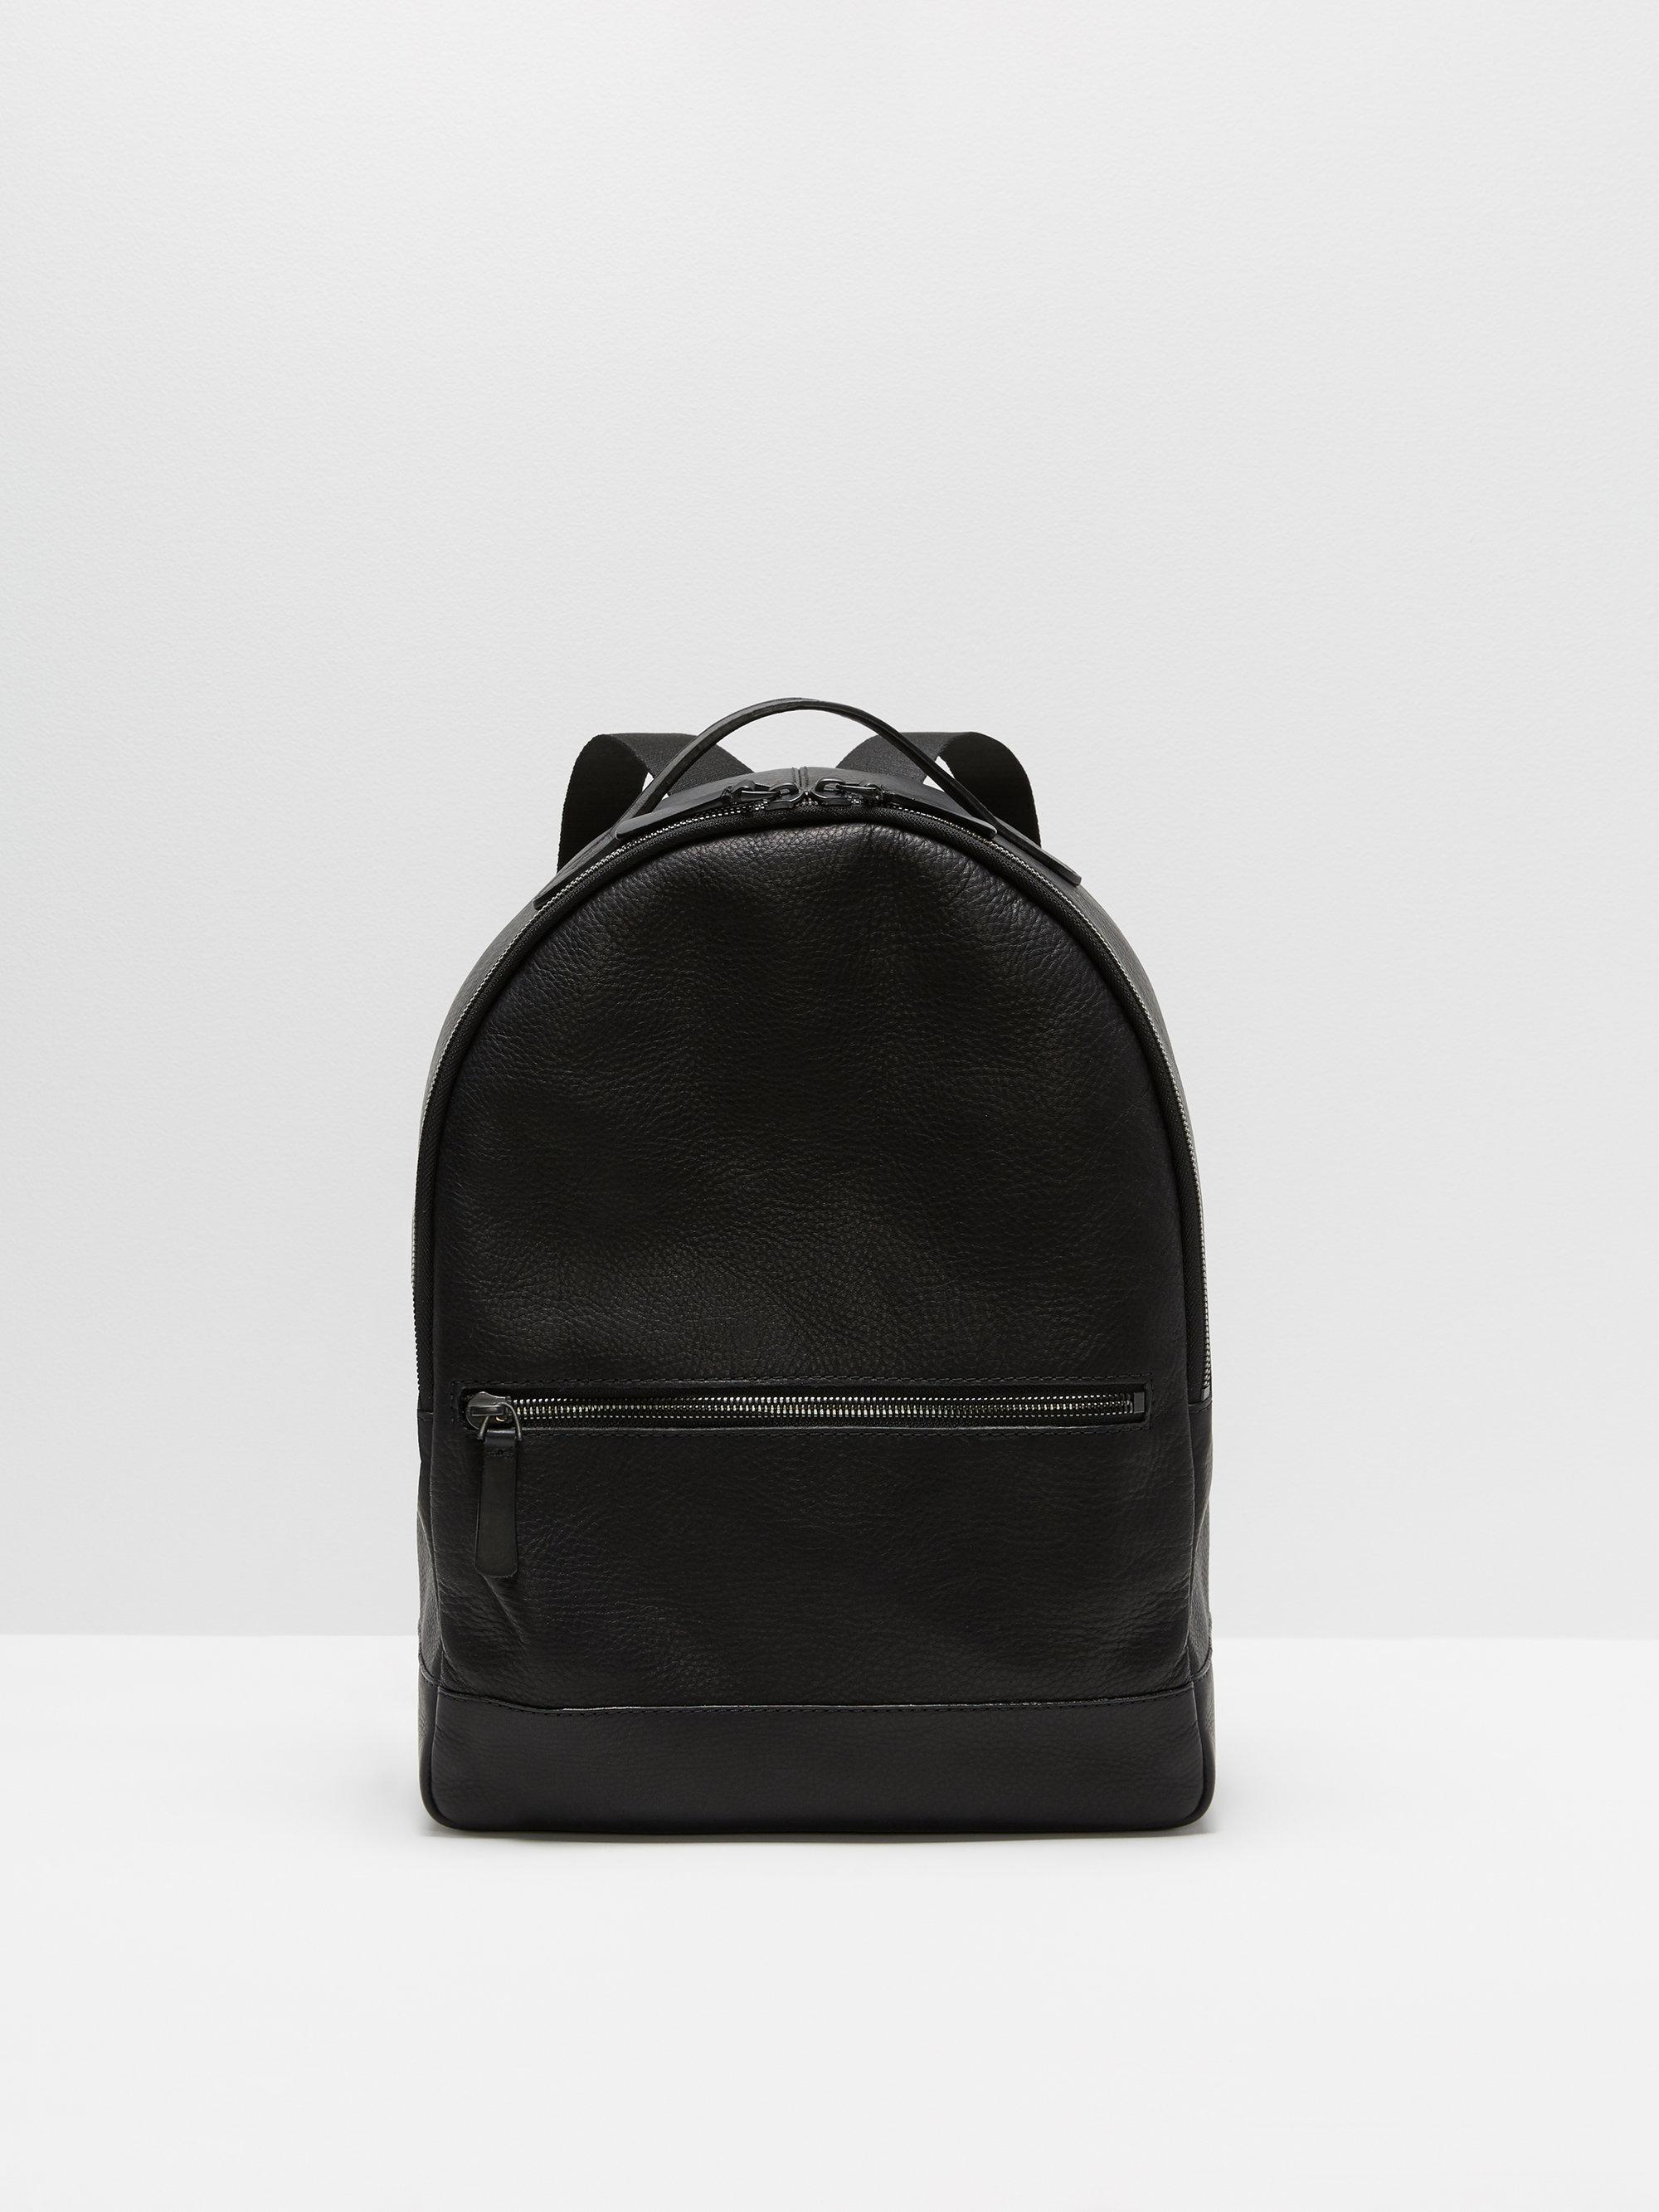 Frank + oak The Boulevard Leather Backpack In Black in Black for Men | Lyst